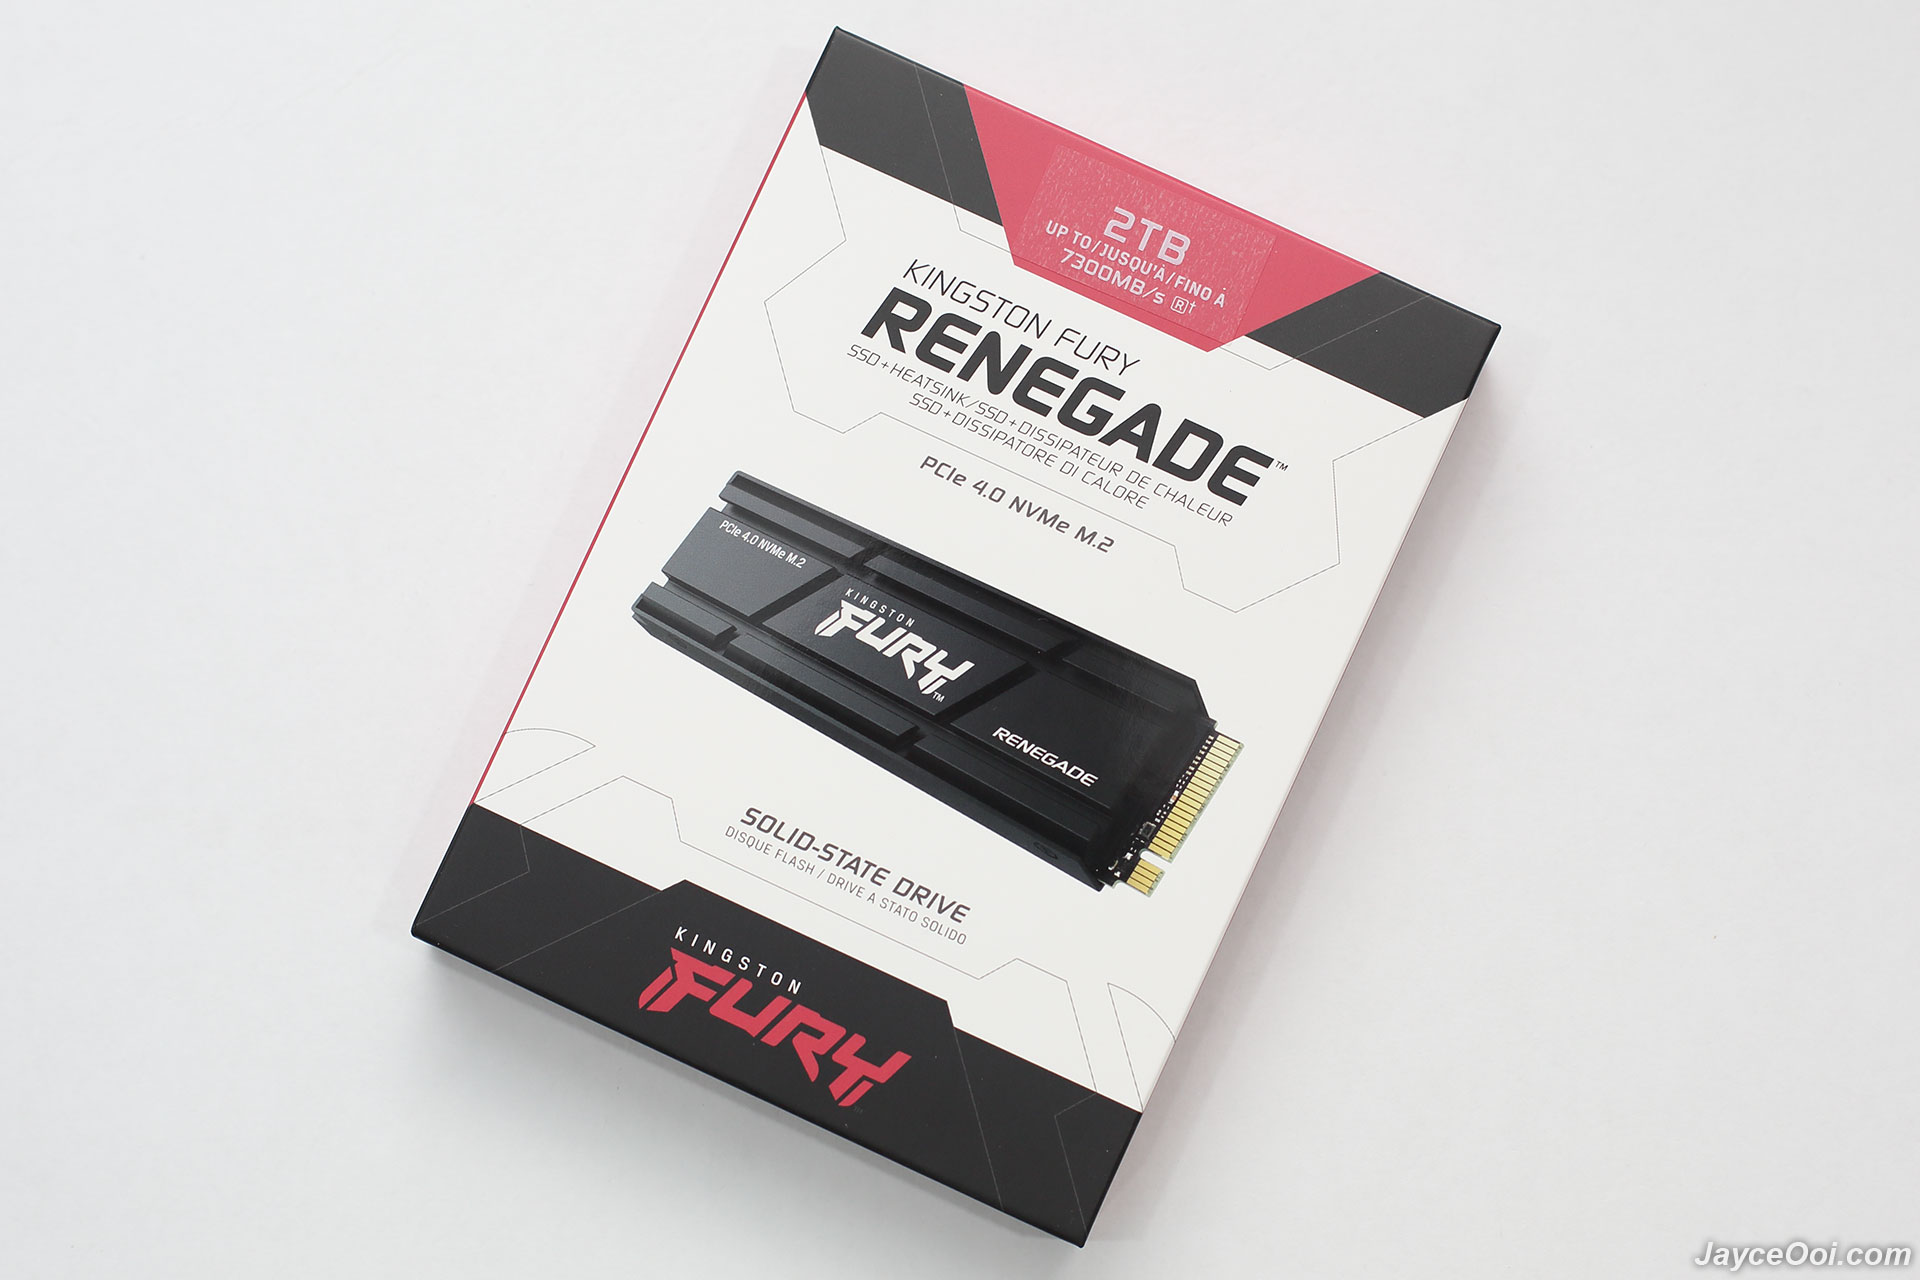 Kingston SSD interne Kingston FURY Renegade PCIe 4.0 - 2 To - NVMe